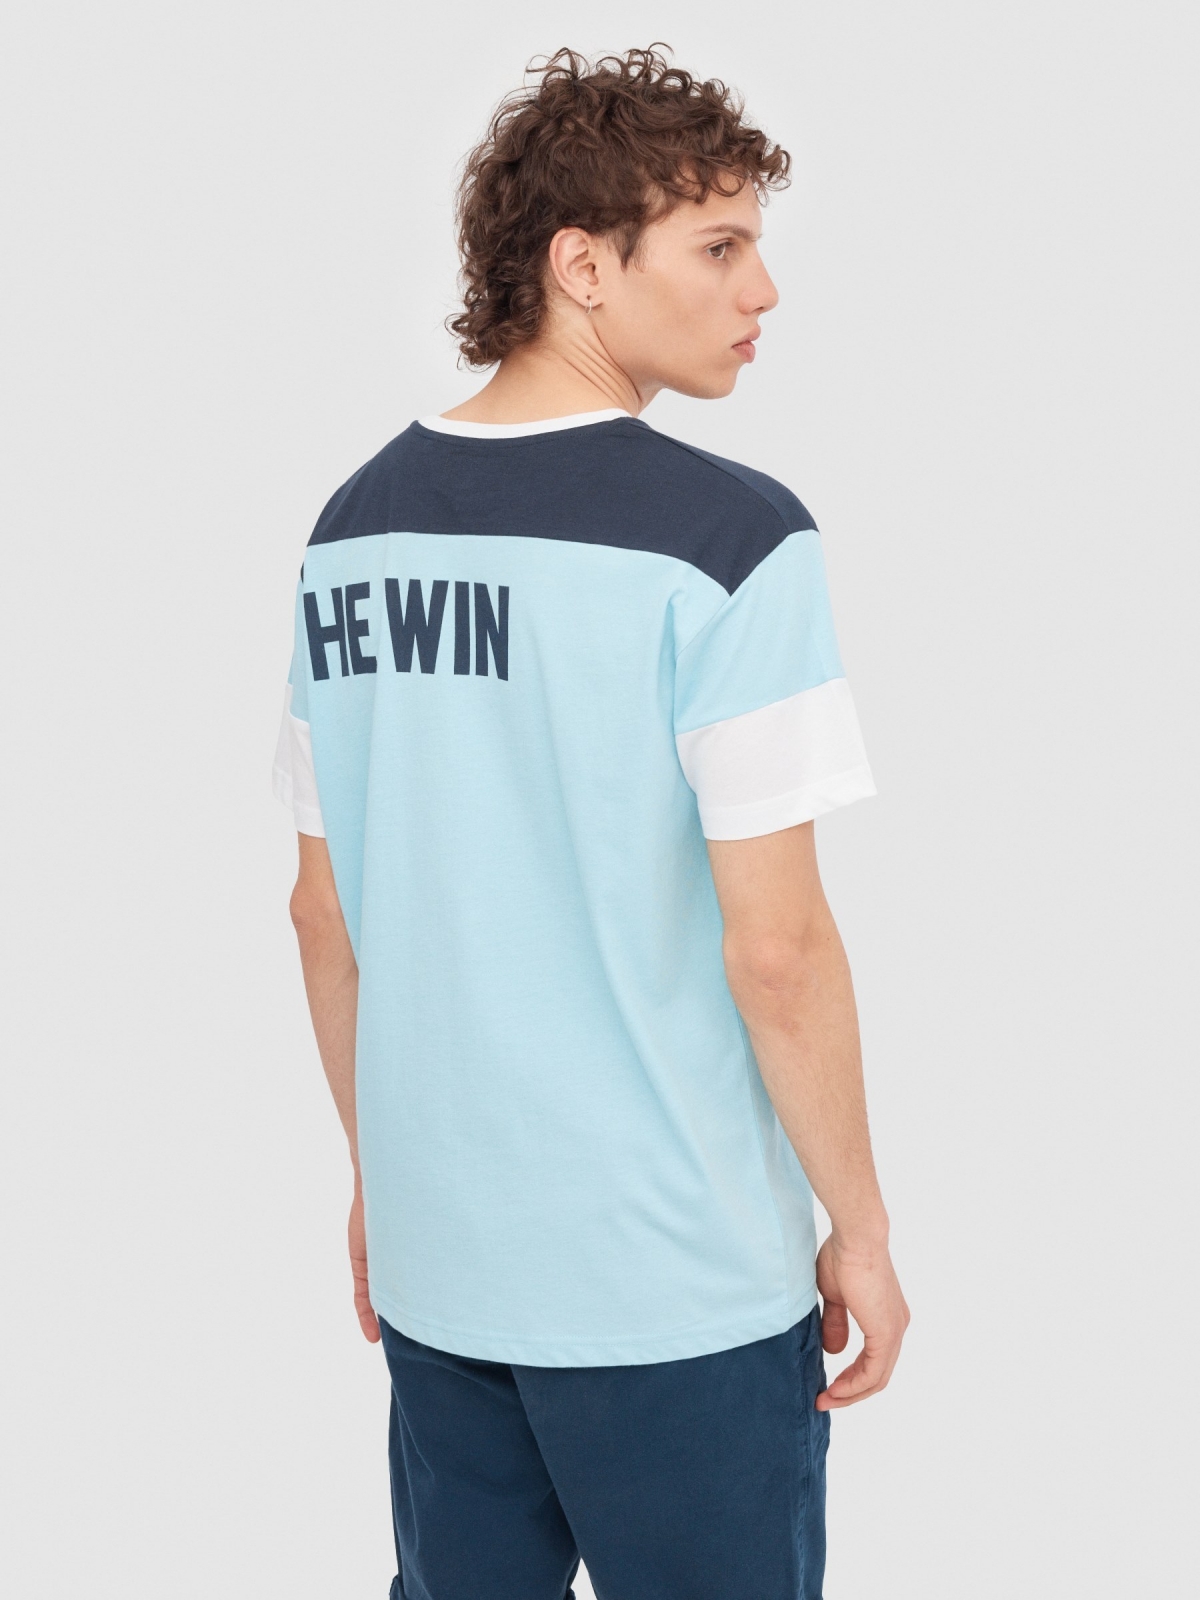 Camiseta deportiva textura azul claro vista media trasera